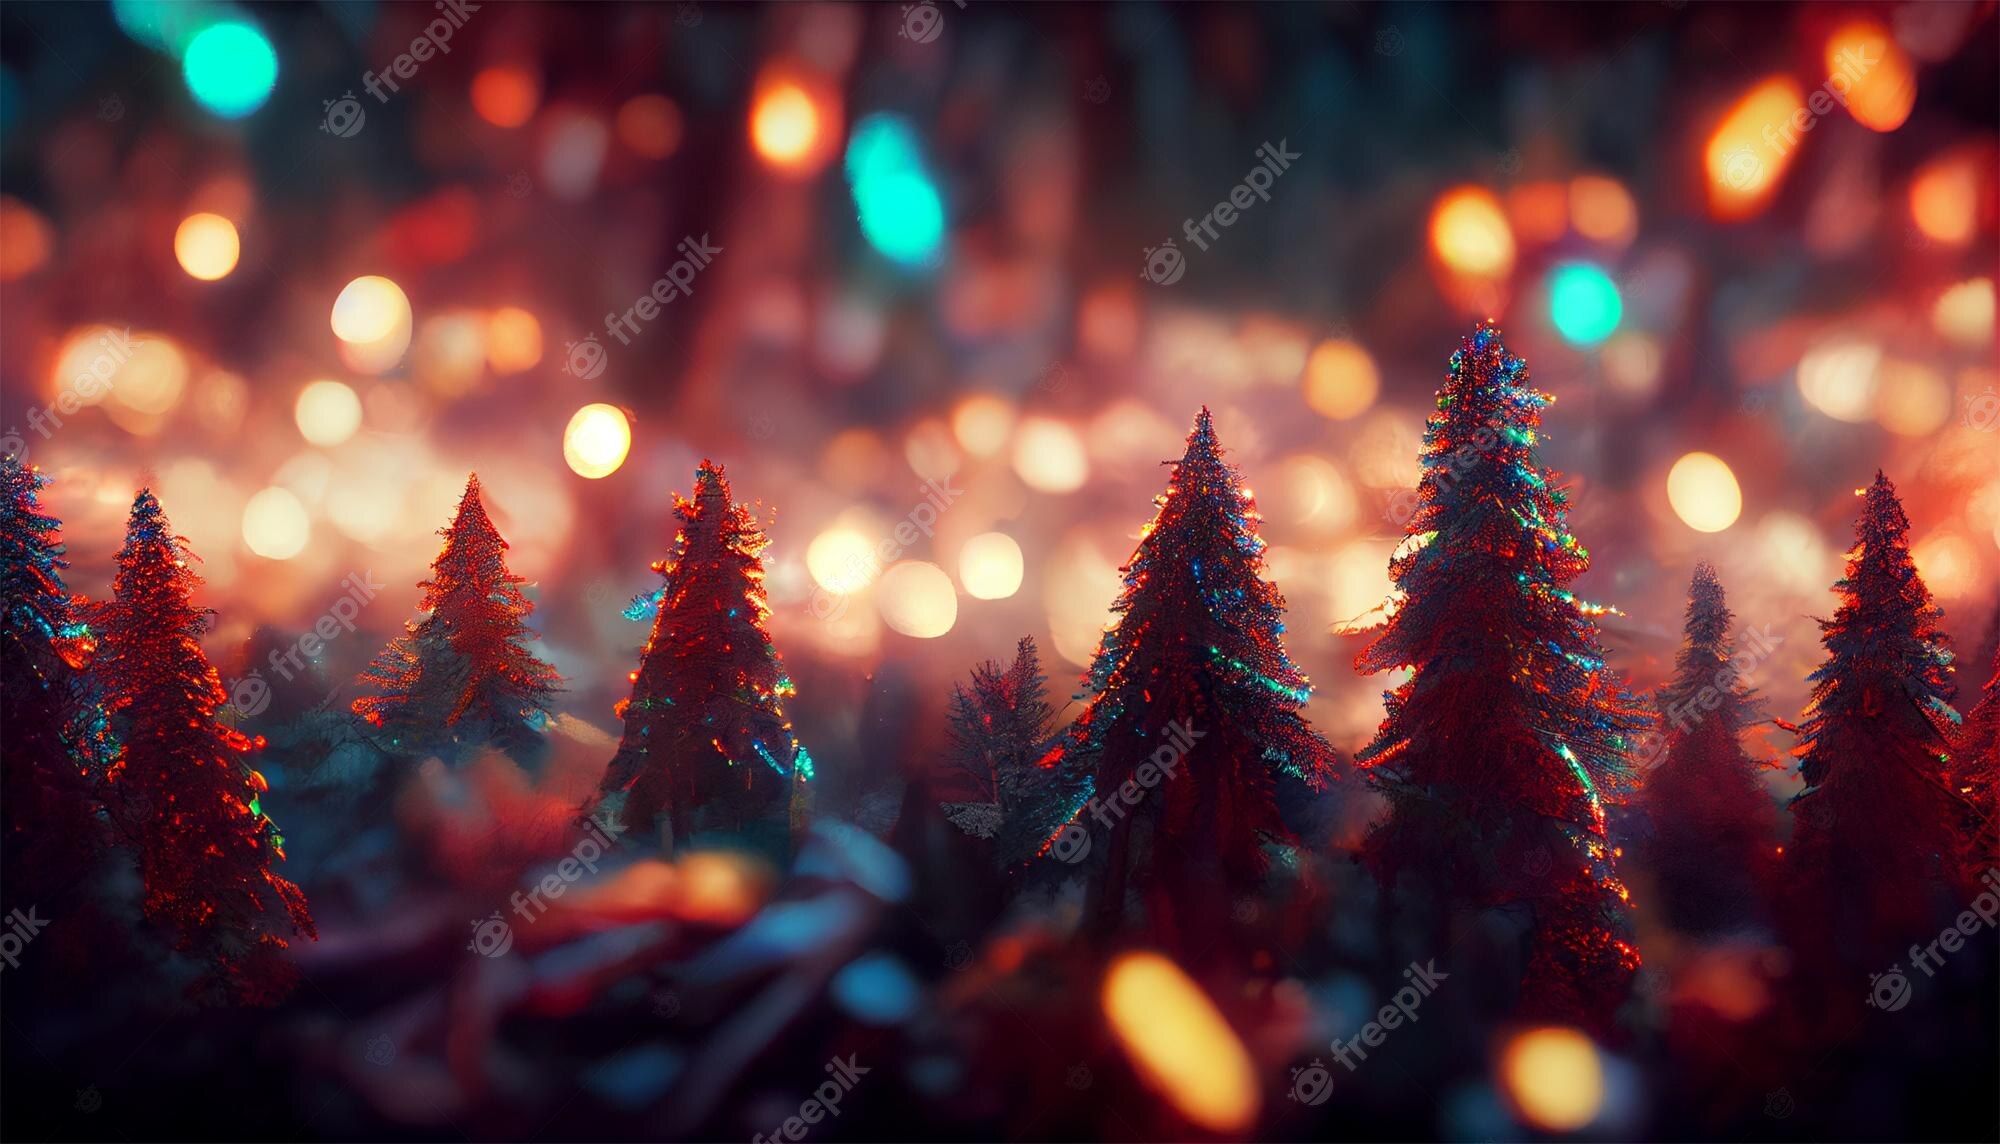 Premium Photo. Trees with christmas lights